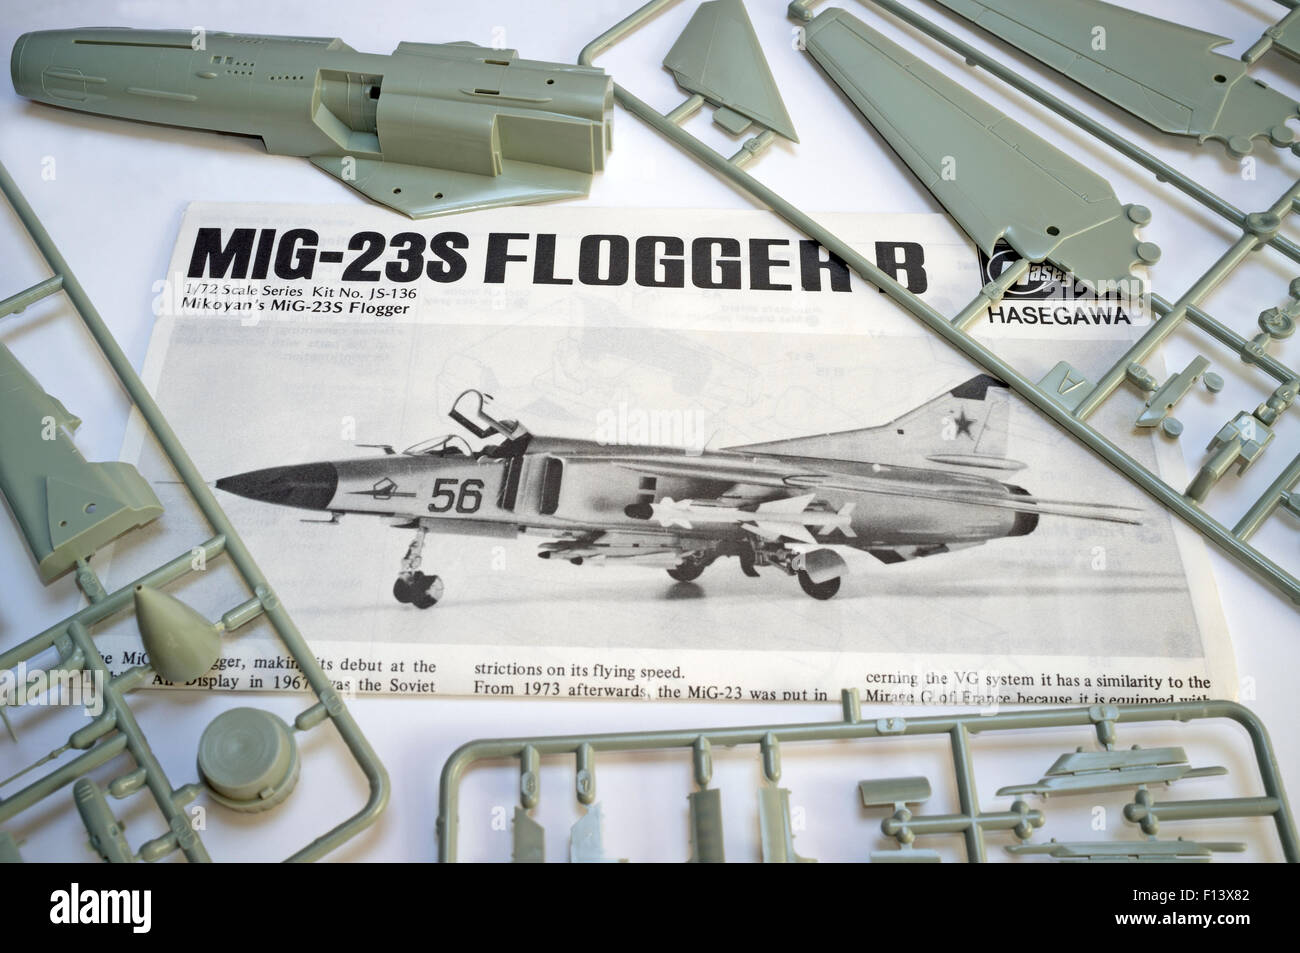 Hasegawa Mig-23S Flogger B Soviet Airforce fight jet model Stock Photo